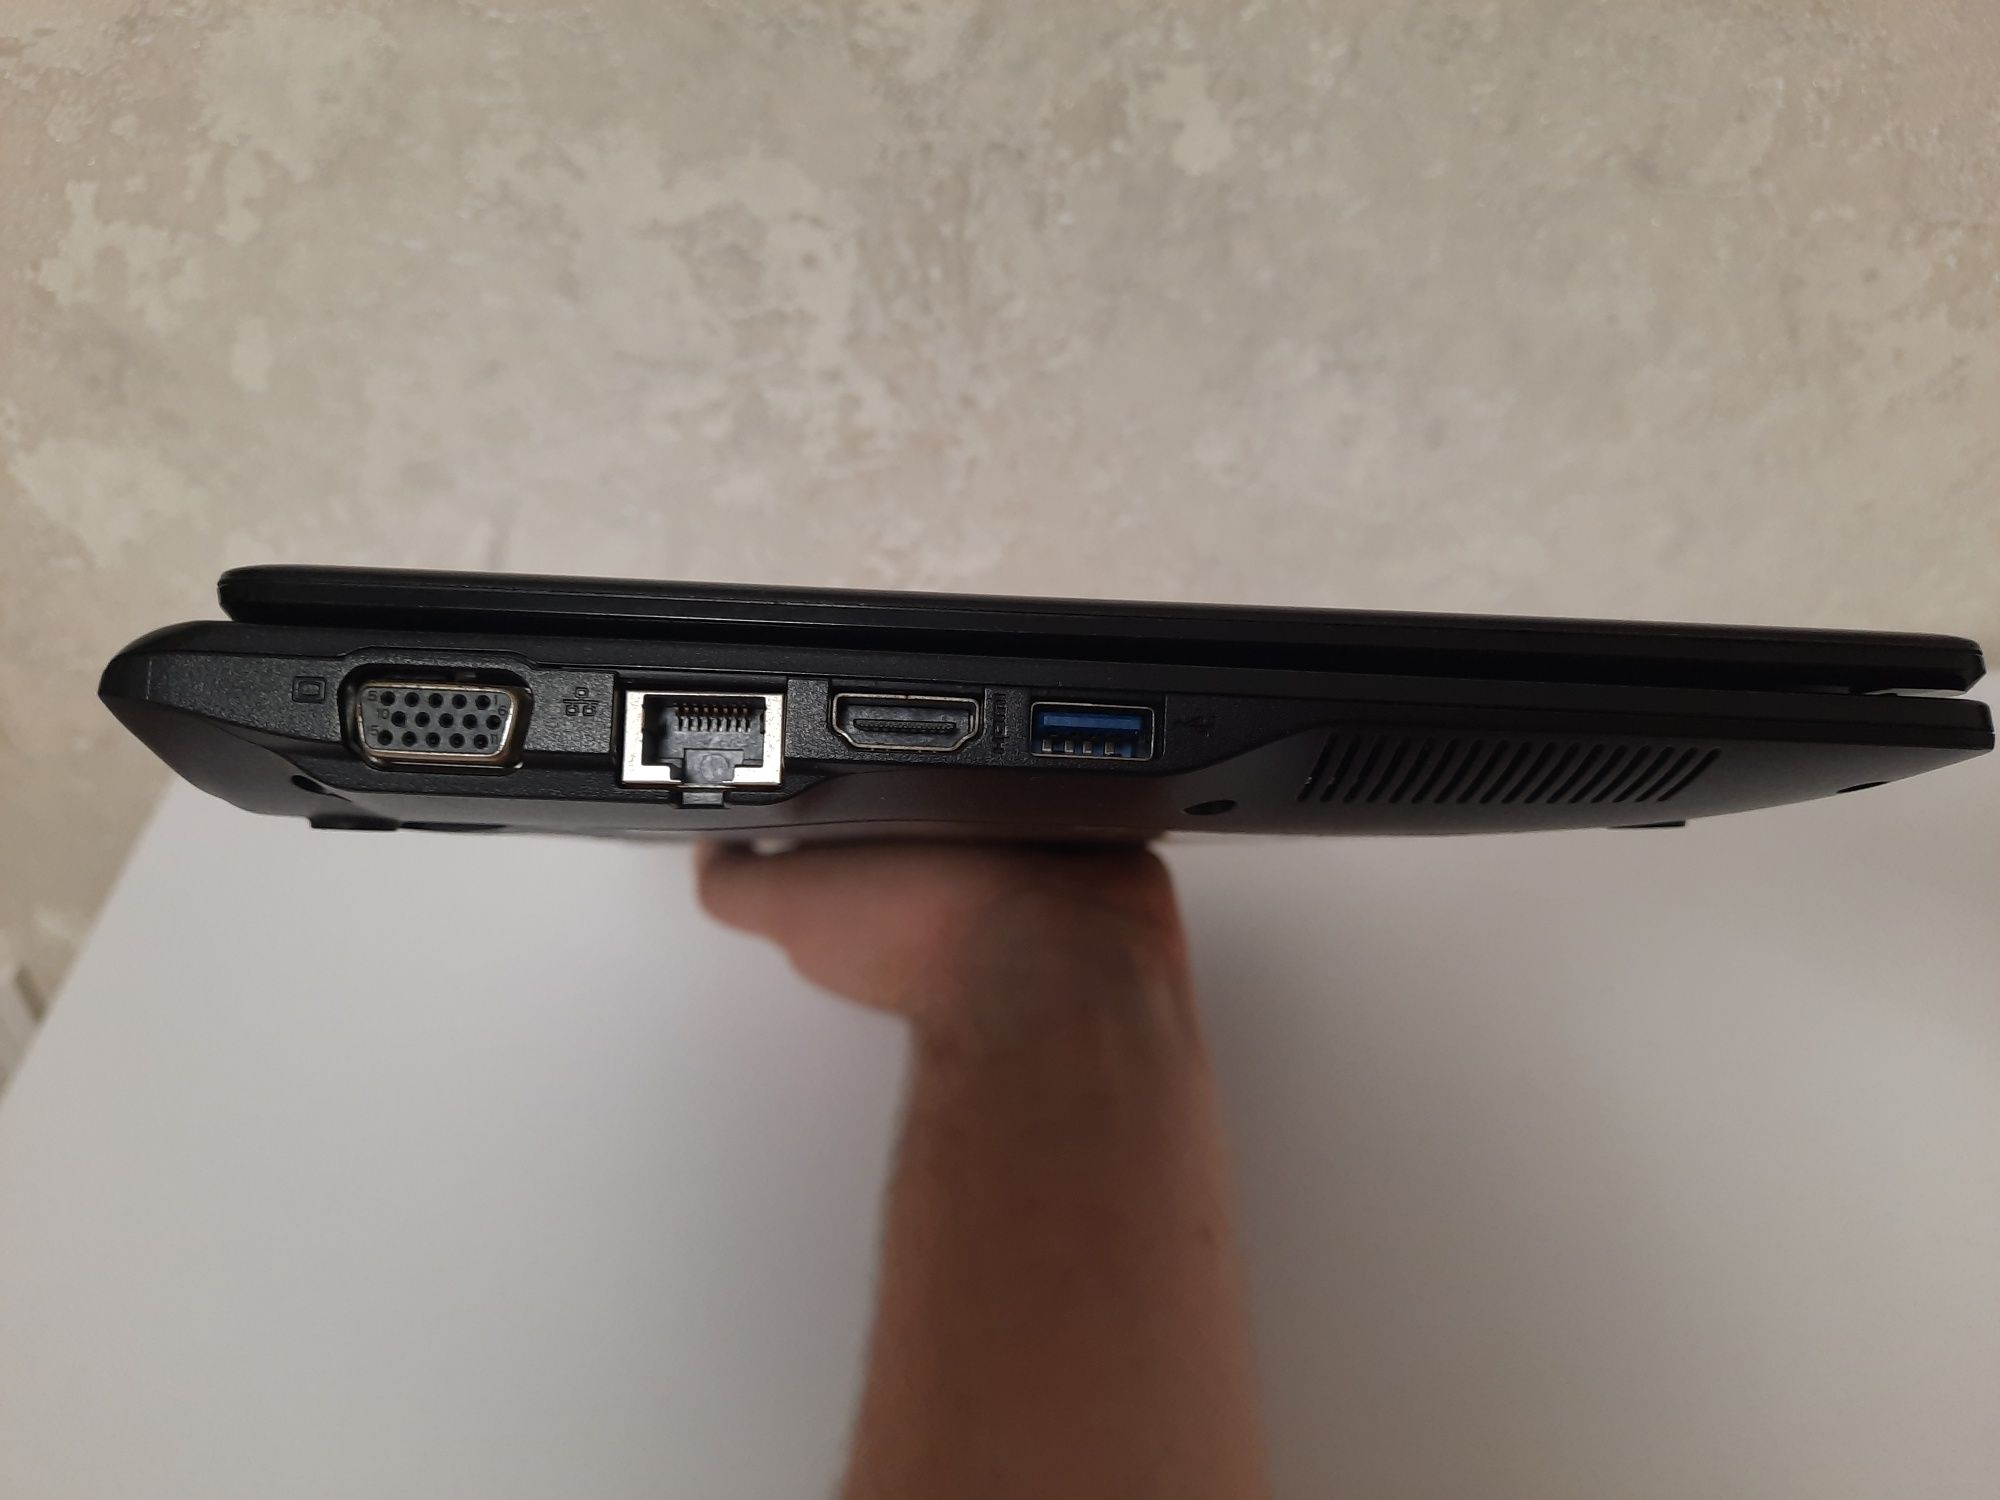 Нетбук Ноутбук Acer Aspire V5 121 series + додатково сумка ,в чудовому